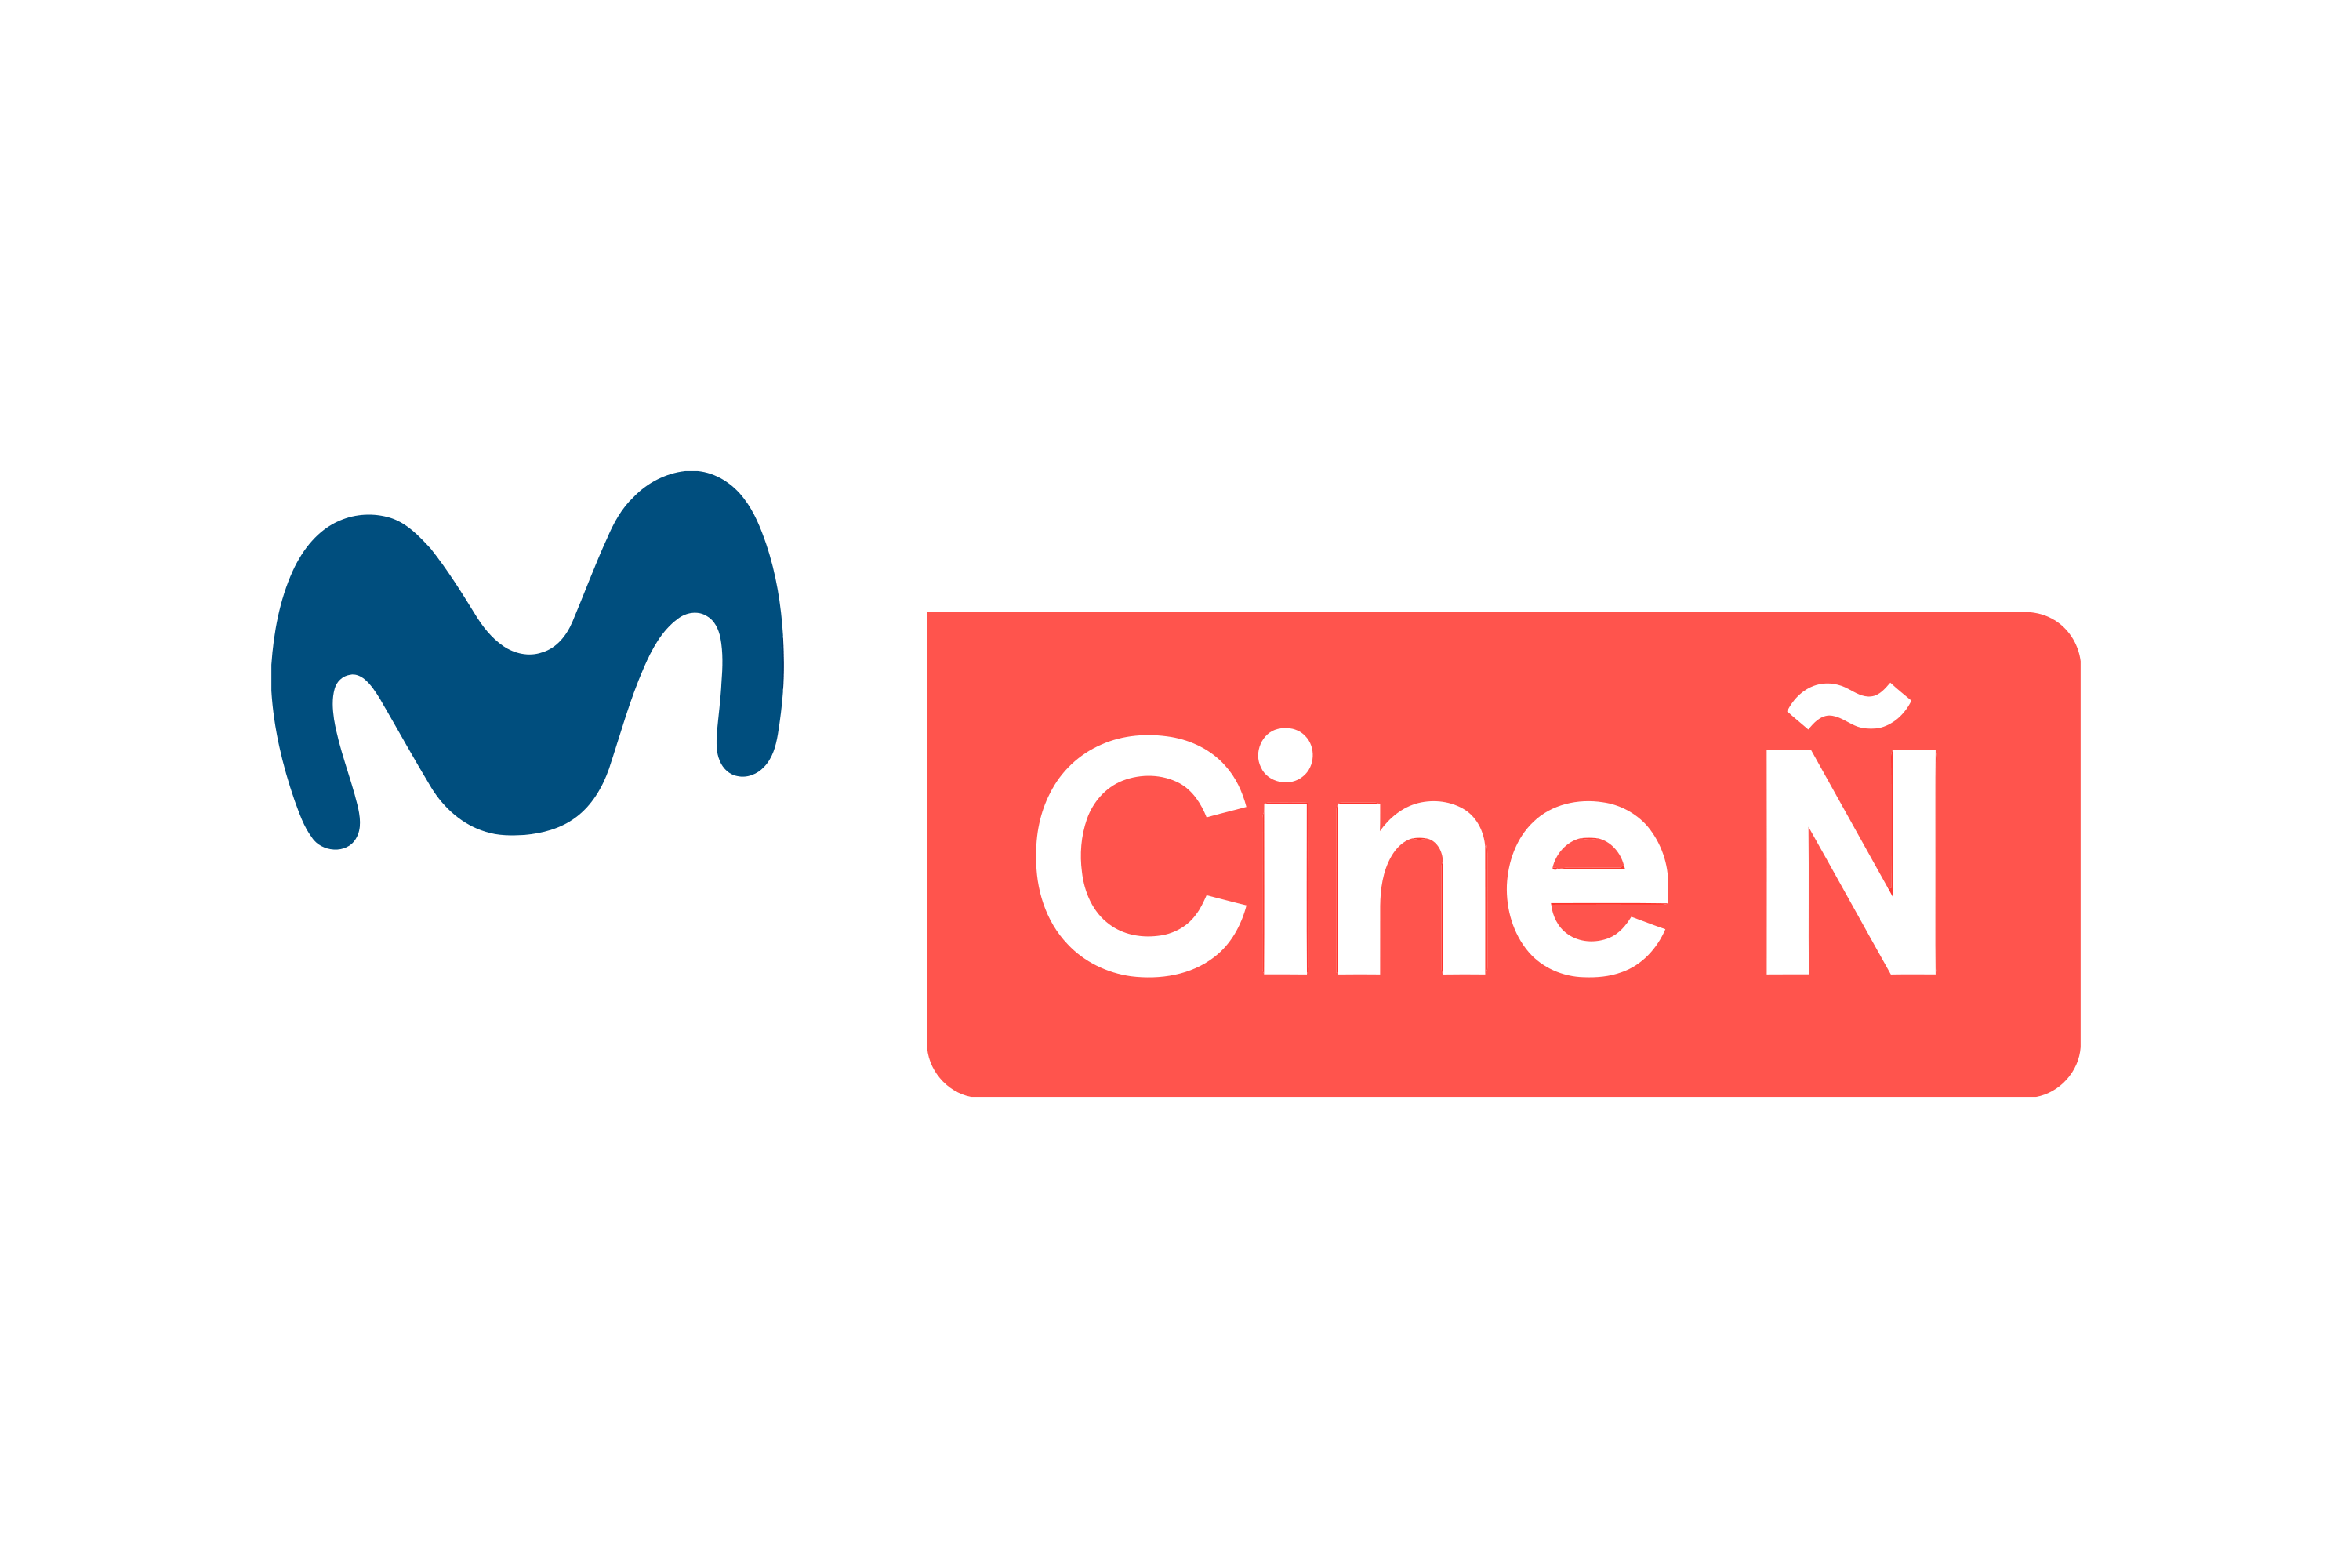 Download Movistar Cine Español Logo in SVG Vector or PNG File Format - Logo .wine